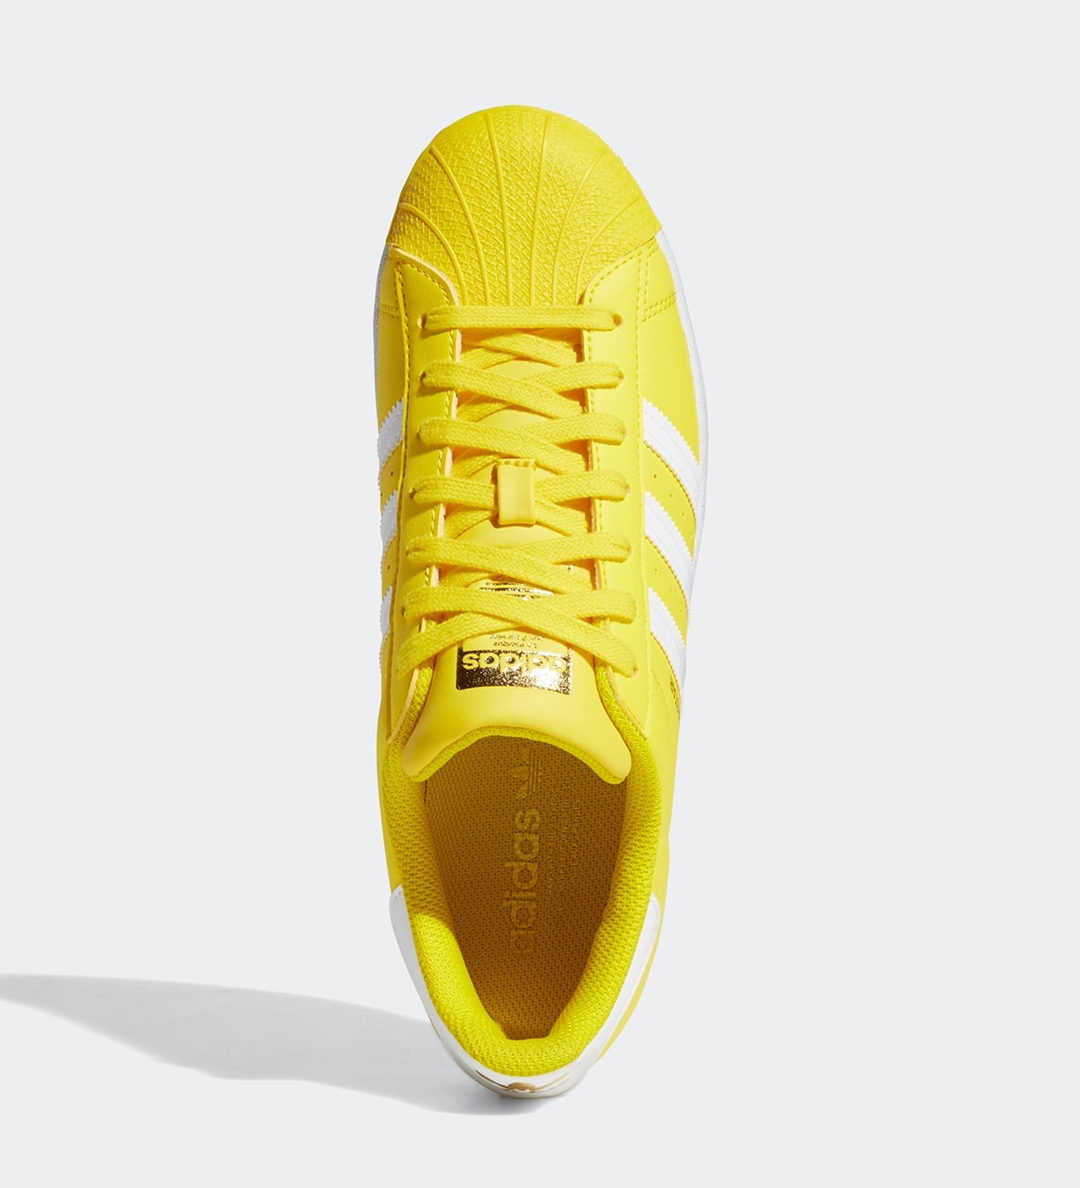 adidas Originals SUPERSTAR “Canary Yellow” (アディダス オリジナルス スーパースター “カナリヤイエロー”) [GY5795]